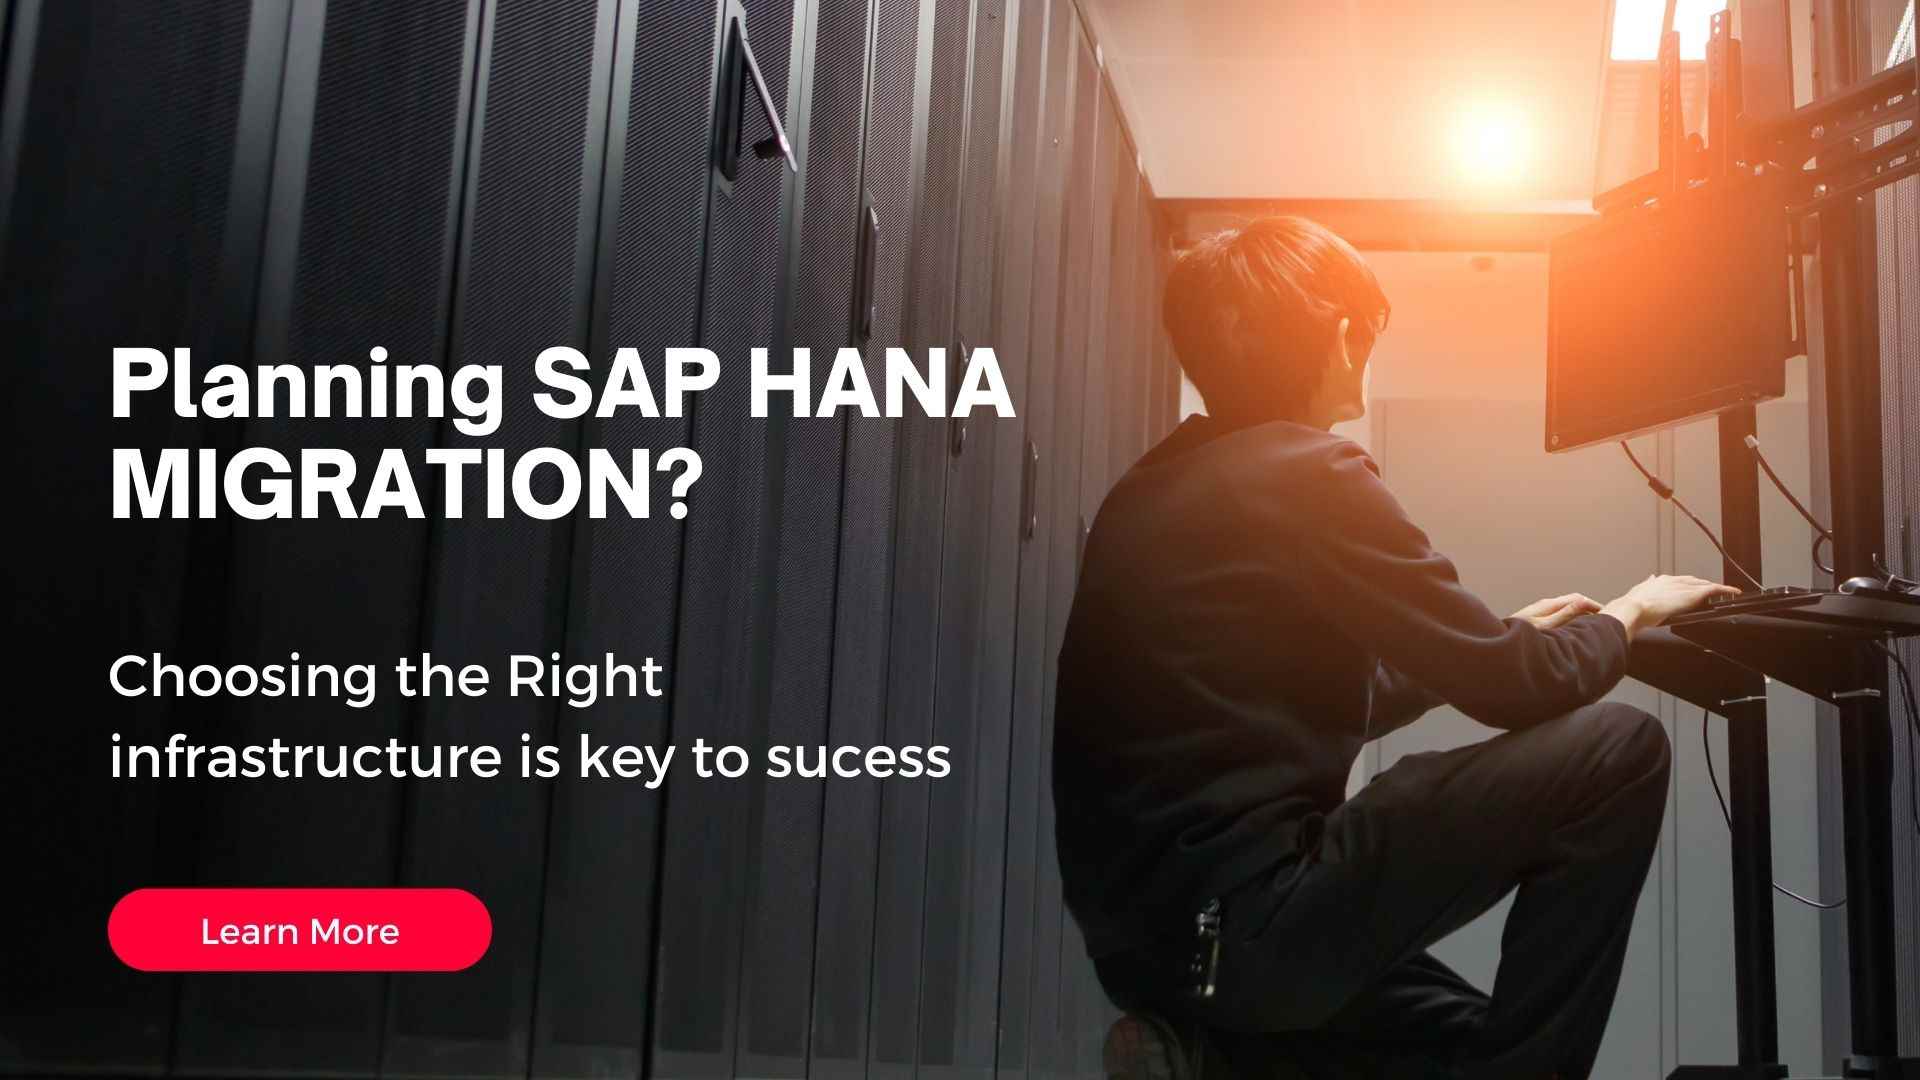 Planning SAP HANA MIGRATION?